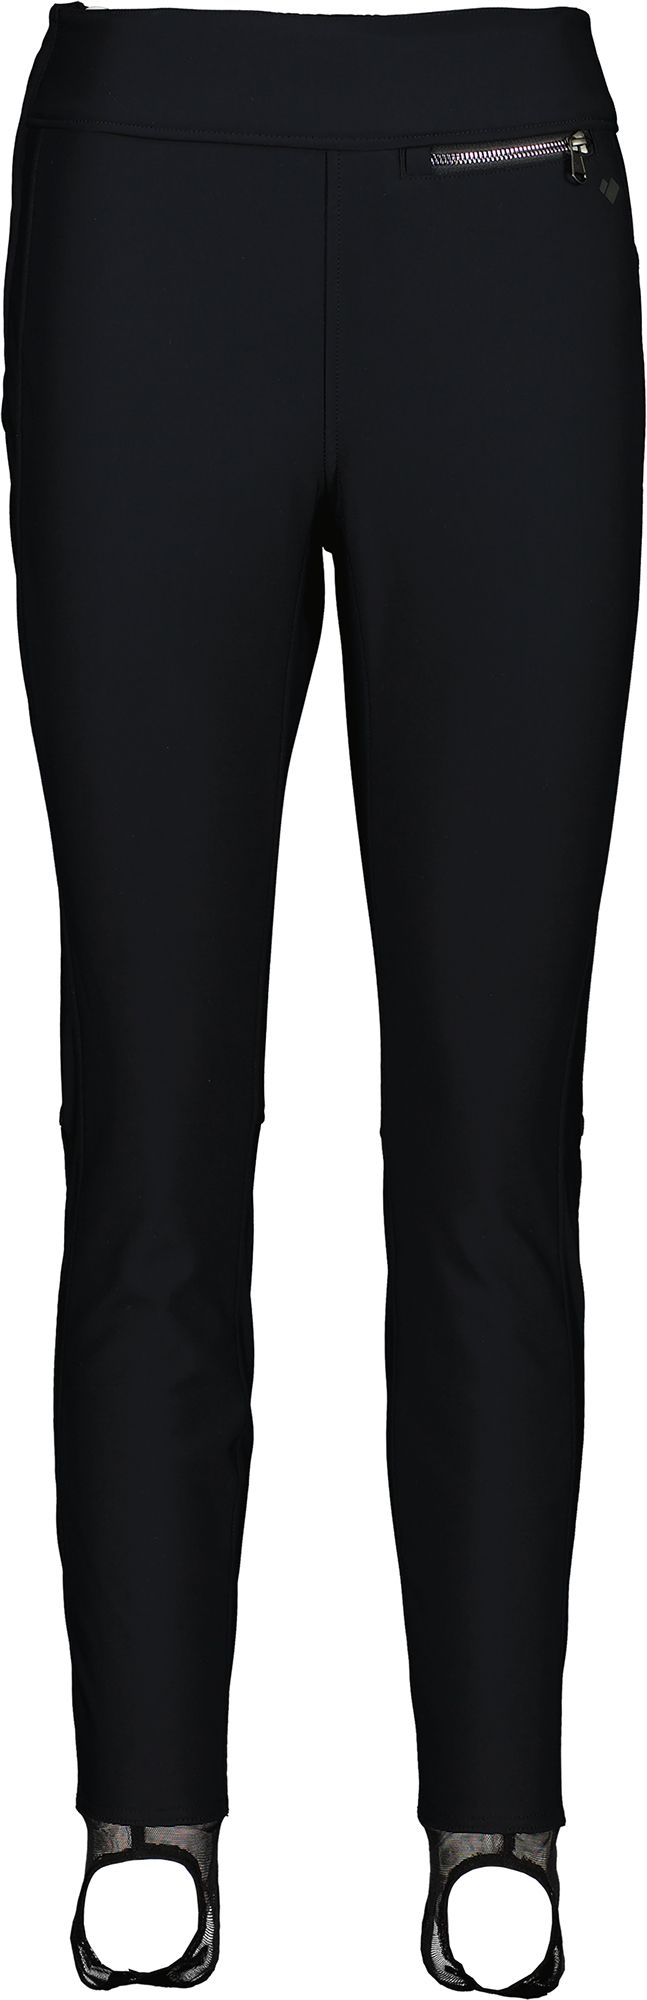 Photos - Ski Wear Obermeyer Women's Jinks ITB Softshell Pants, Size 12, Black 22OBEWWJNKSTBS